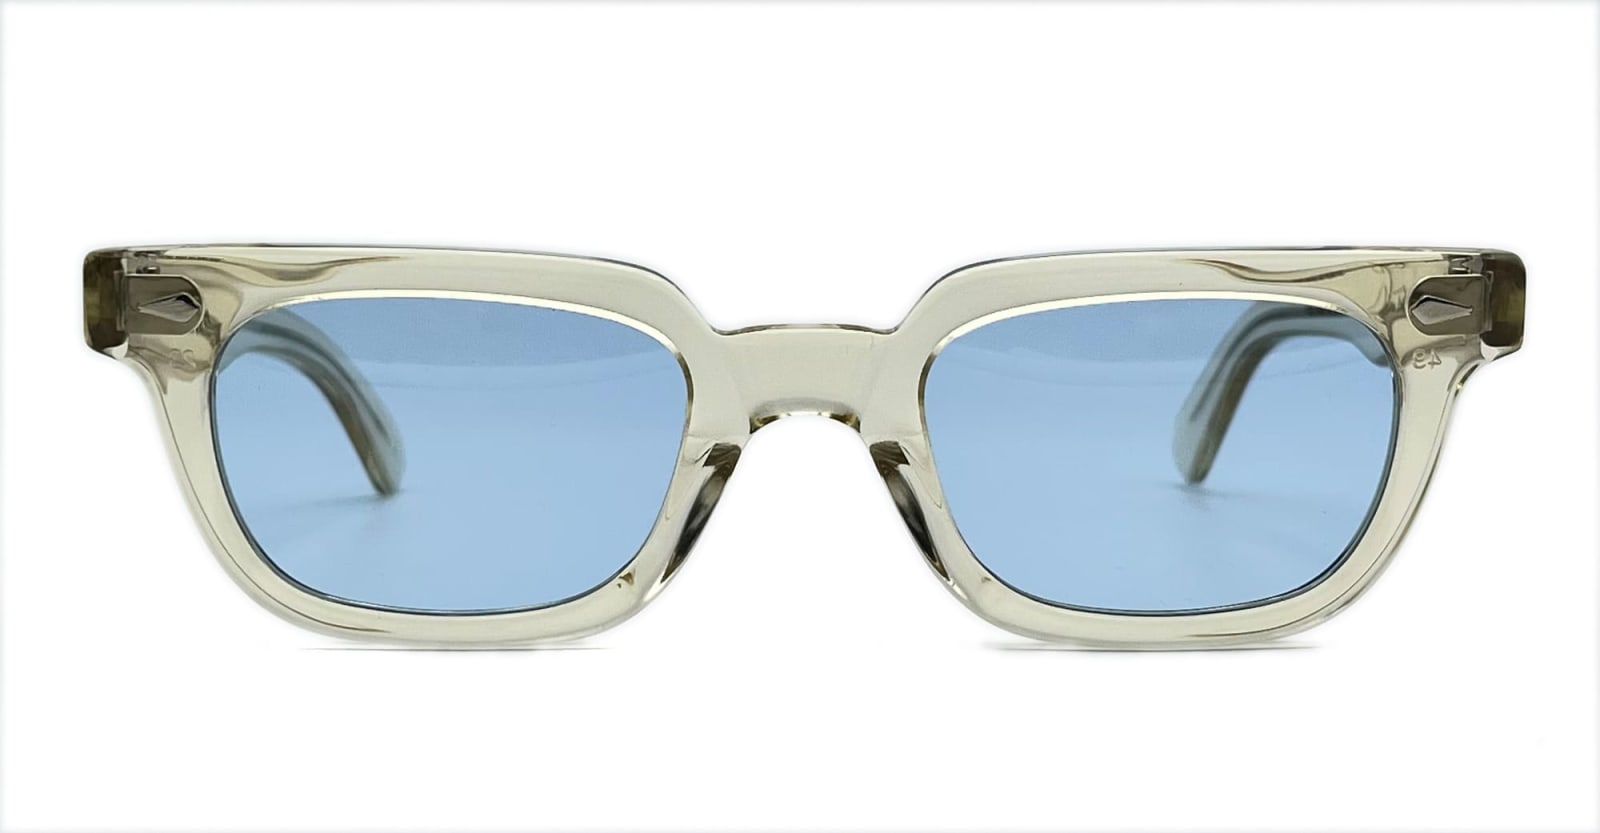 Julius Tart Optical T-man - Champagne / Light Blue Sunglasses